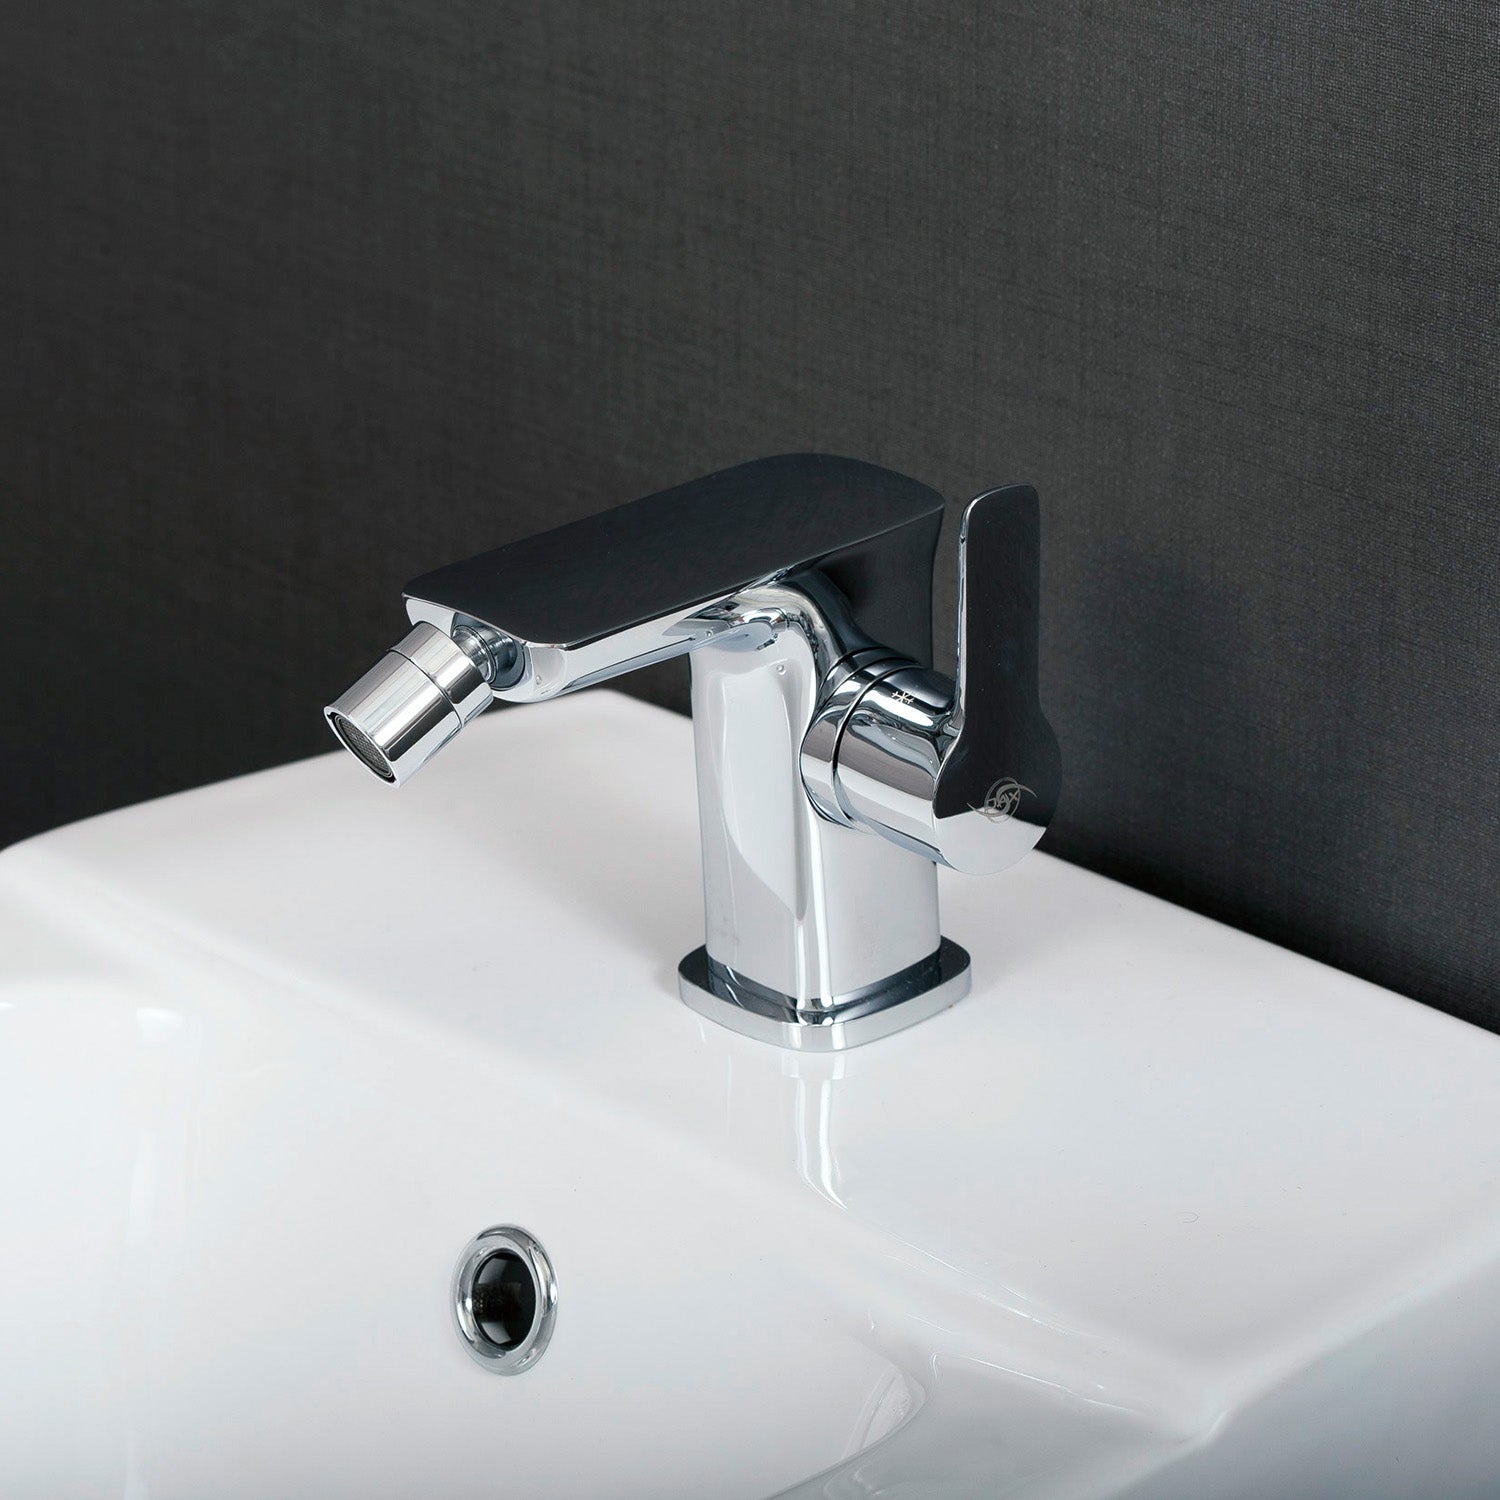 DAX Single Handle Bidet Faucet, Brass Body, Chrome Finish, 4-7/16 x 4-1/4 Inches (DAX-8583-CR)